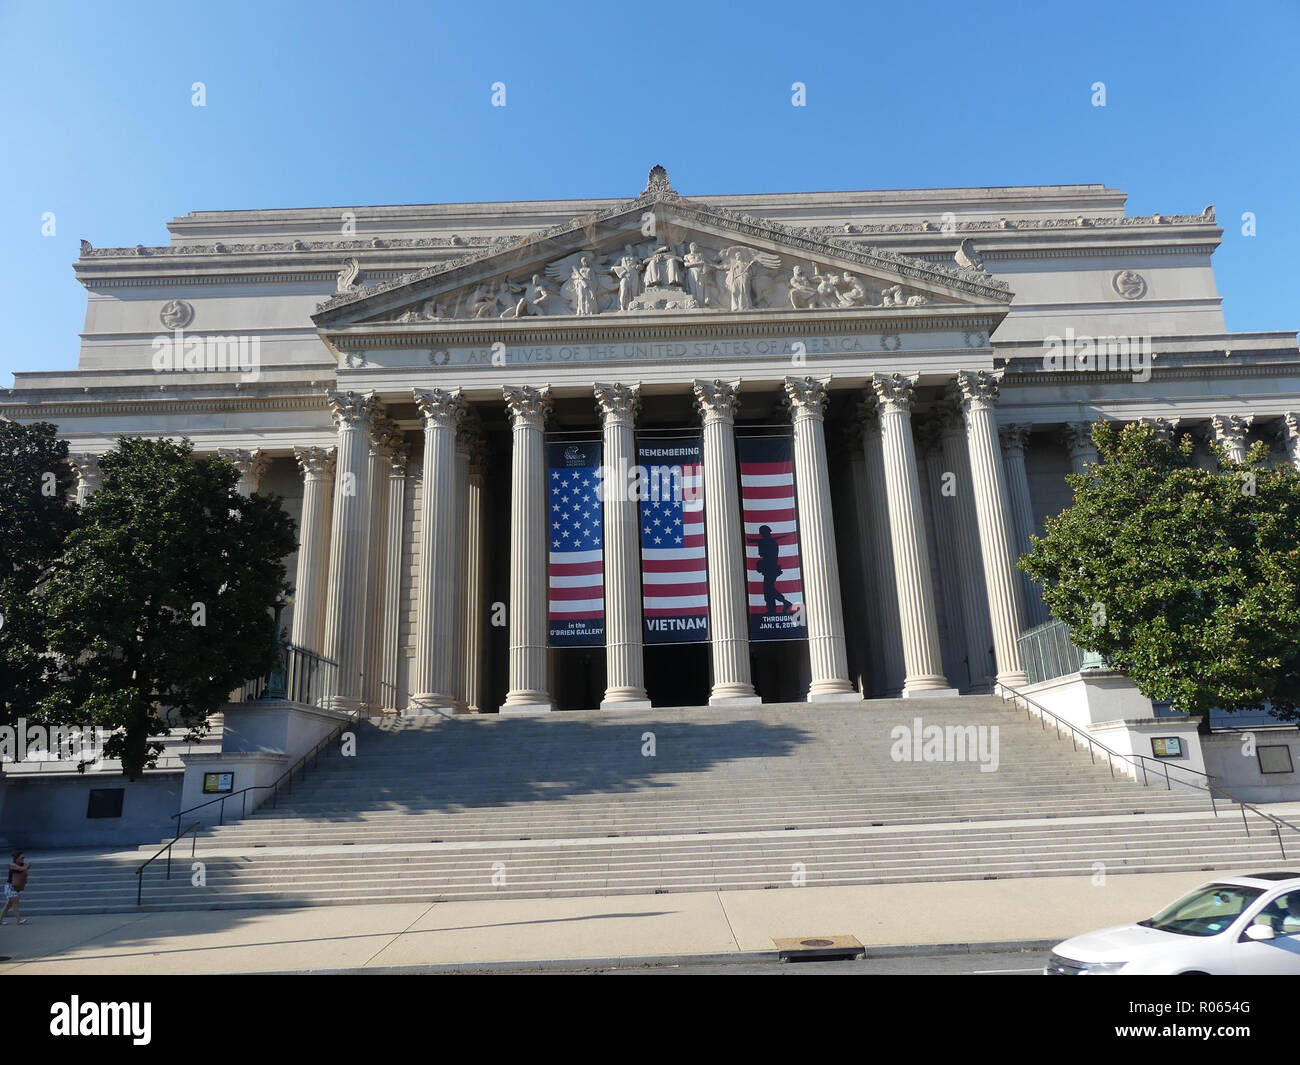 NATIONAL ARCHIVES BAU der Rotunde Eingang auf der Constitution Avenue, Washington D.C. Foto: Tony Gale Stockfoto